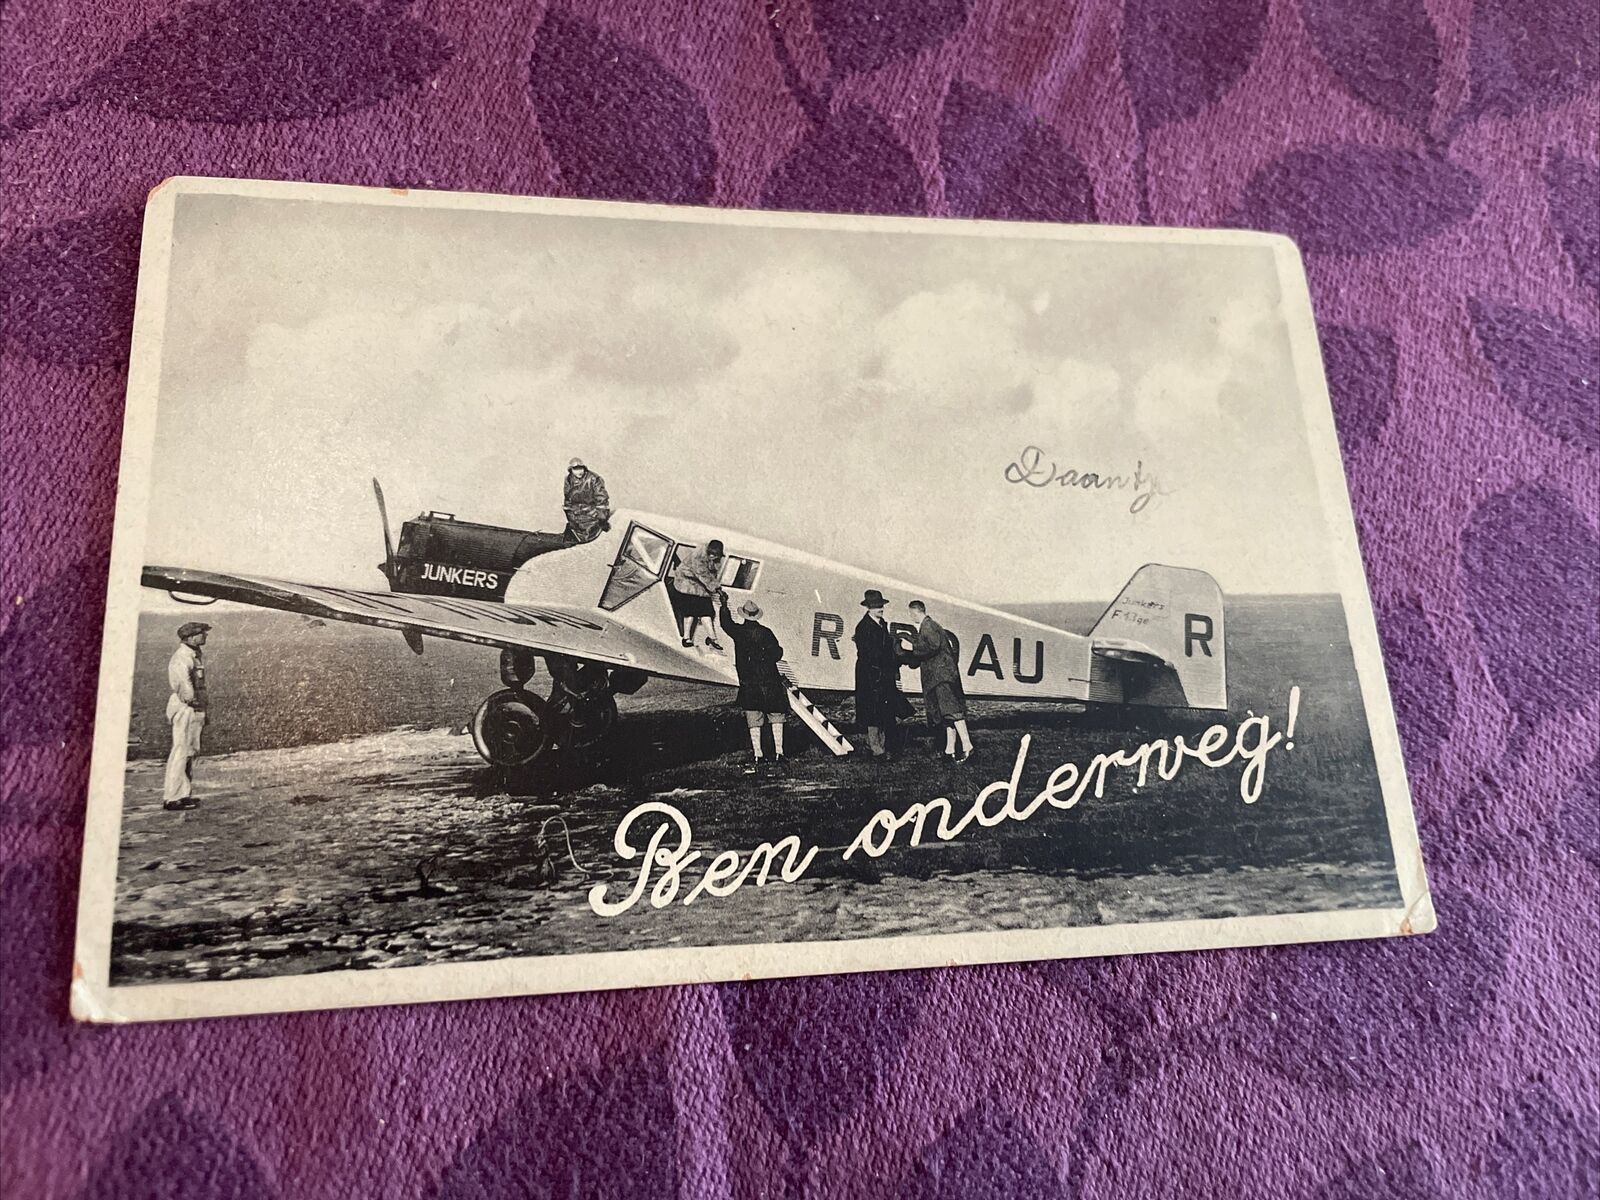 @1925. junkers F-13 “Ben onderweg” on my way argentinian registration postcard